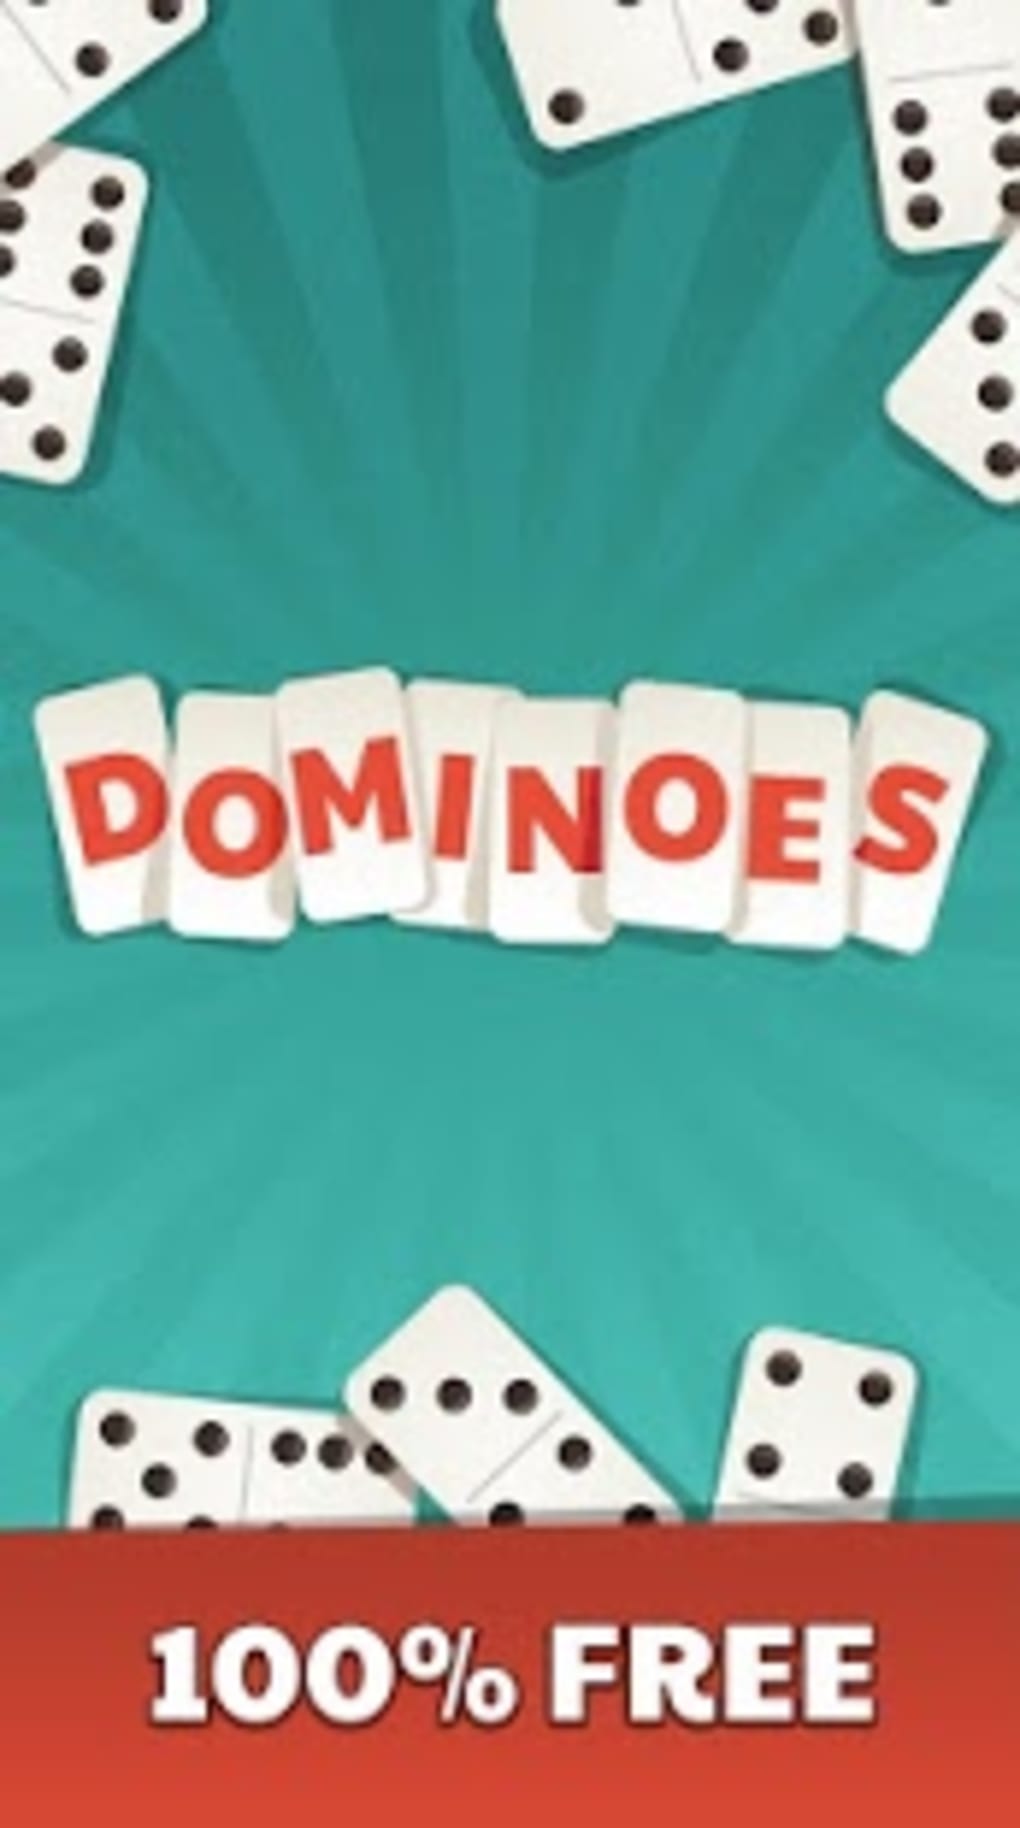 Dominos Online Jogatina: Game 5.8.2 APK - Download